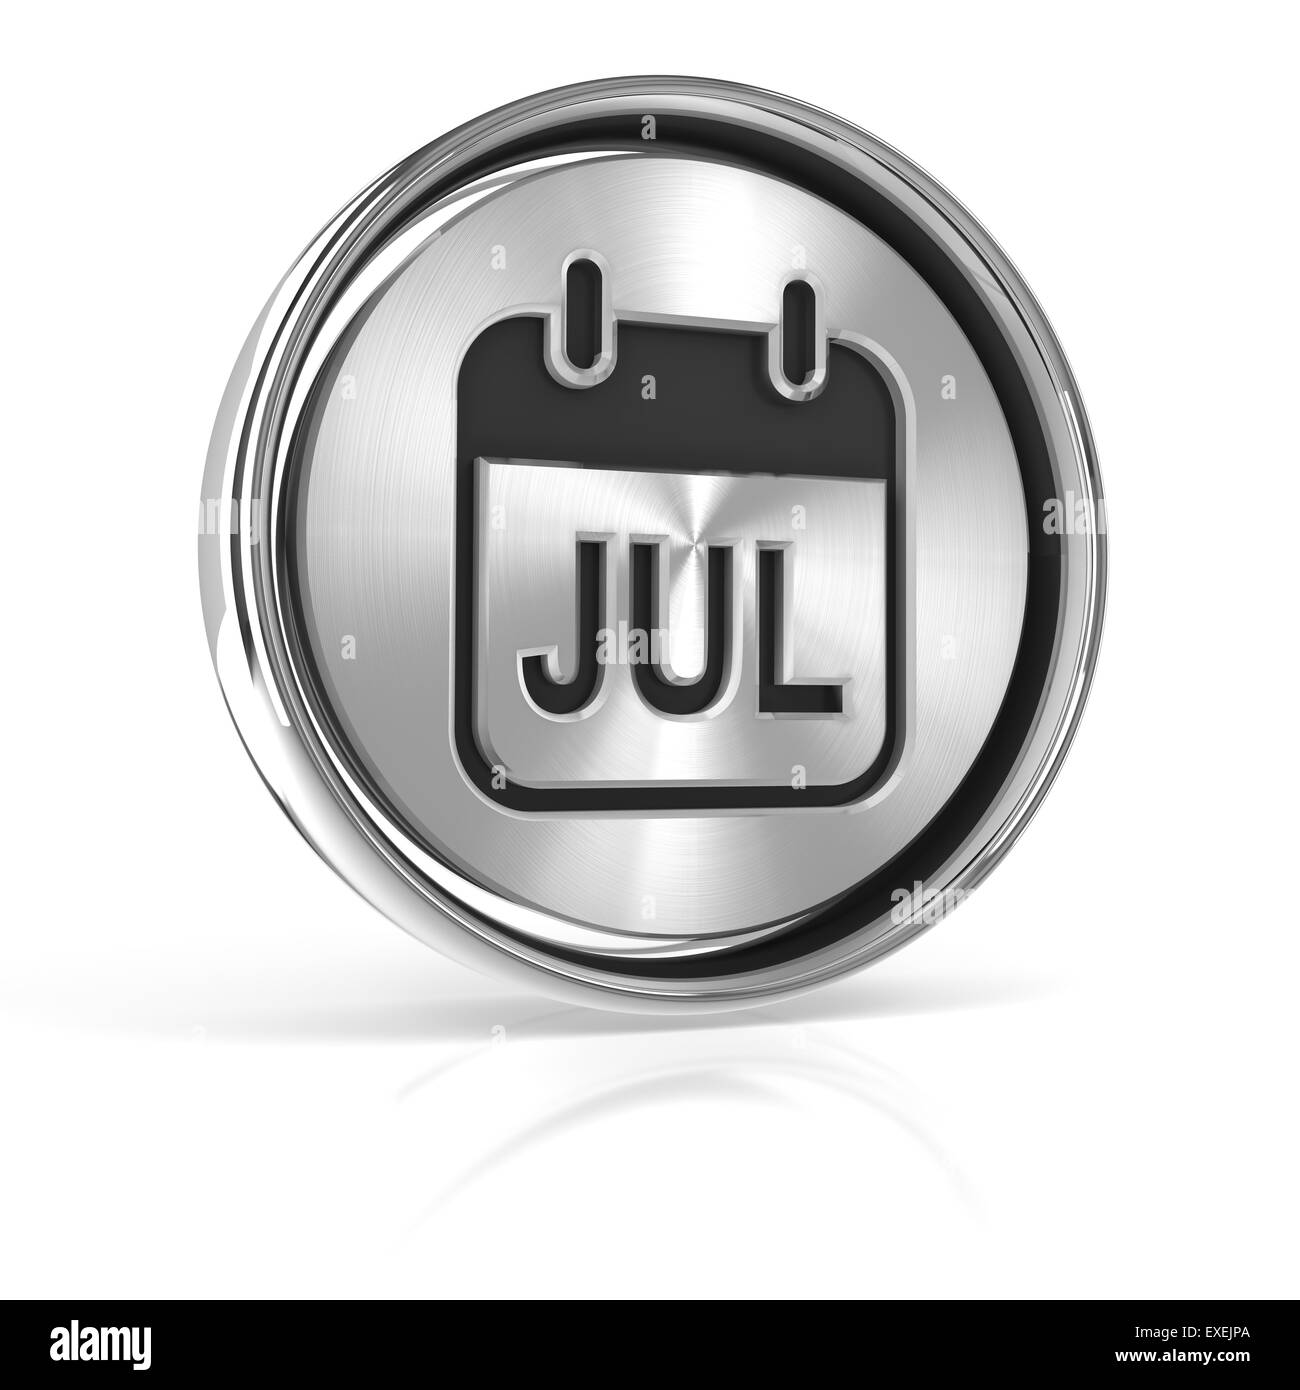 Metallic July calendar icon Stock Photo